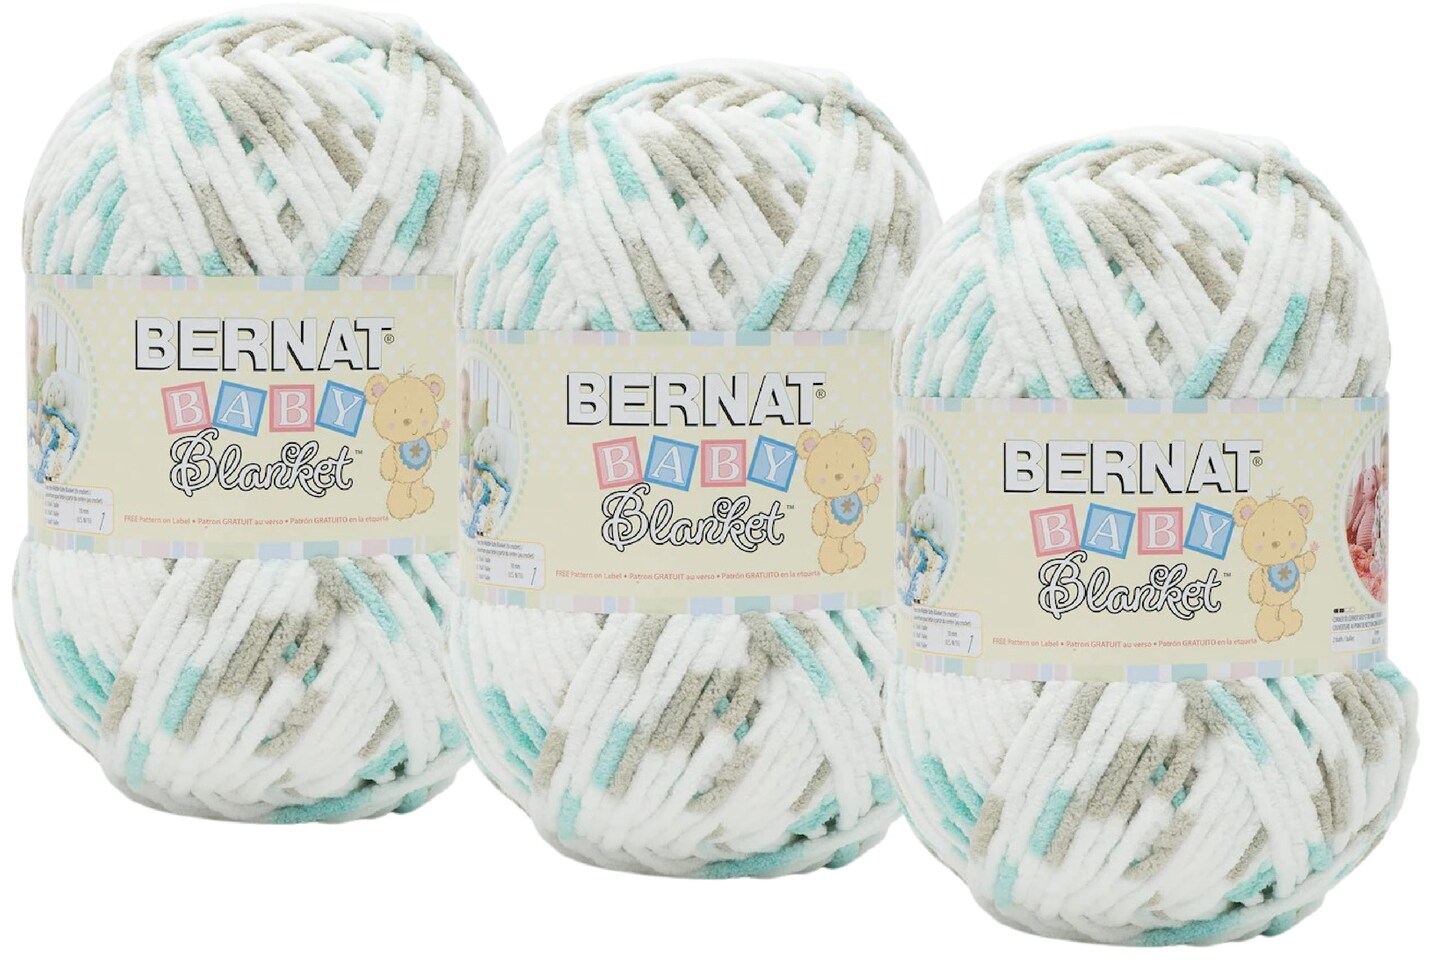 Bernat Baby Blanket Yarn - Big Ball (10.5 oz) - 3 Pack (Seafoam